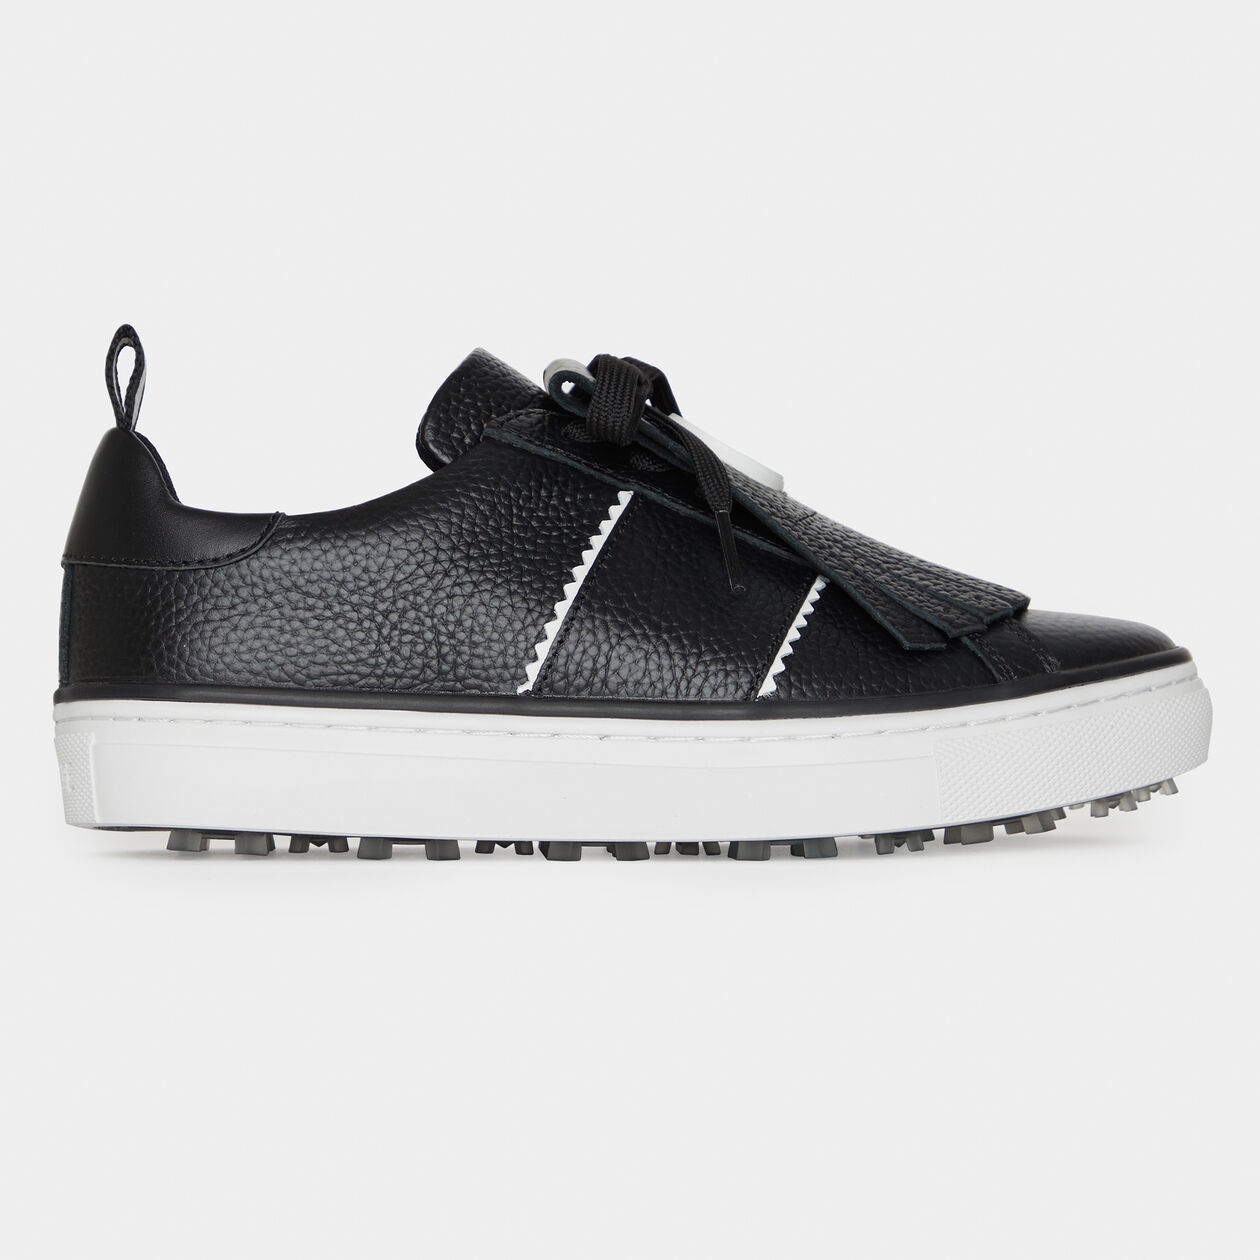 G/FORE Women’s Durf Pebble Leather Kiltie Golf Shoe